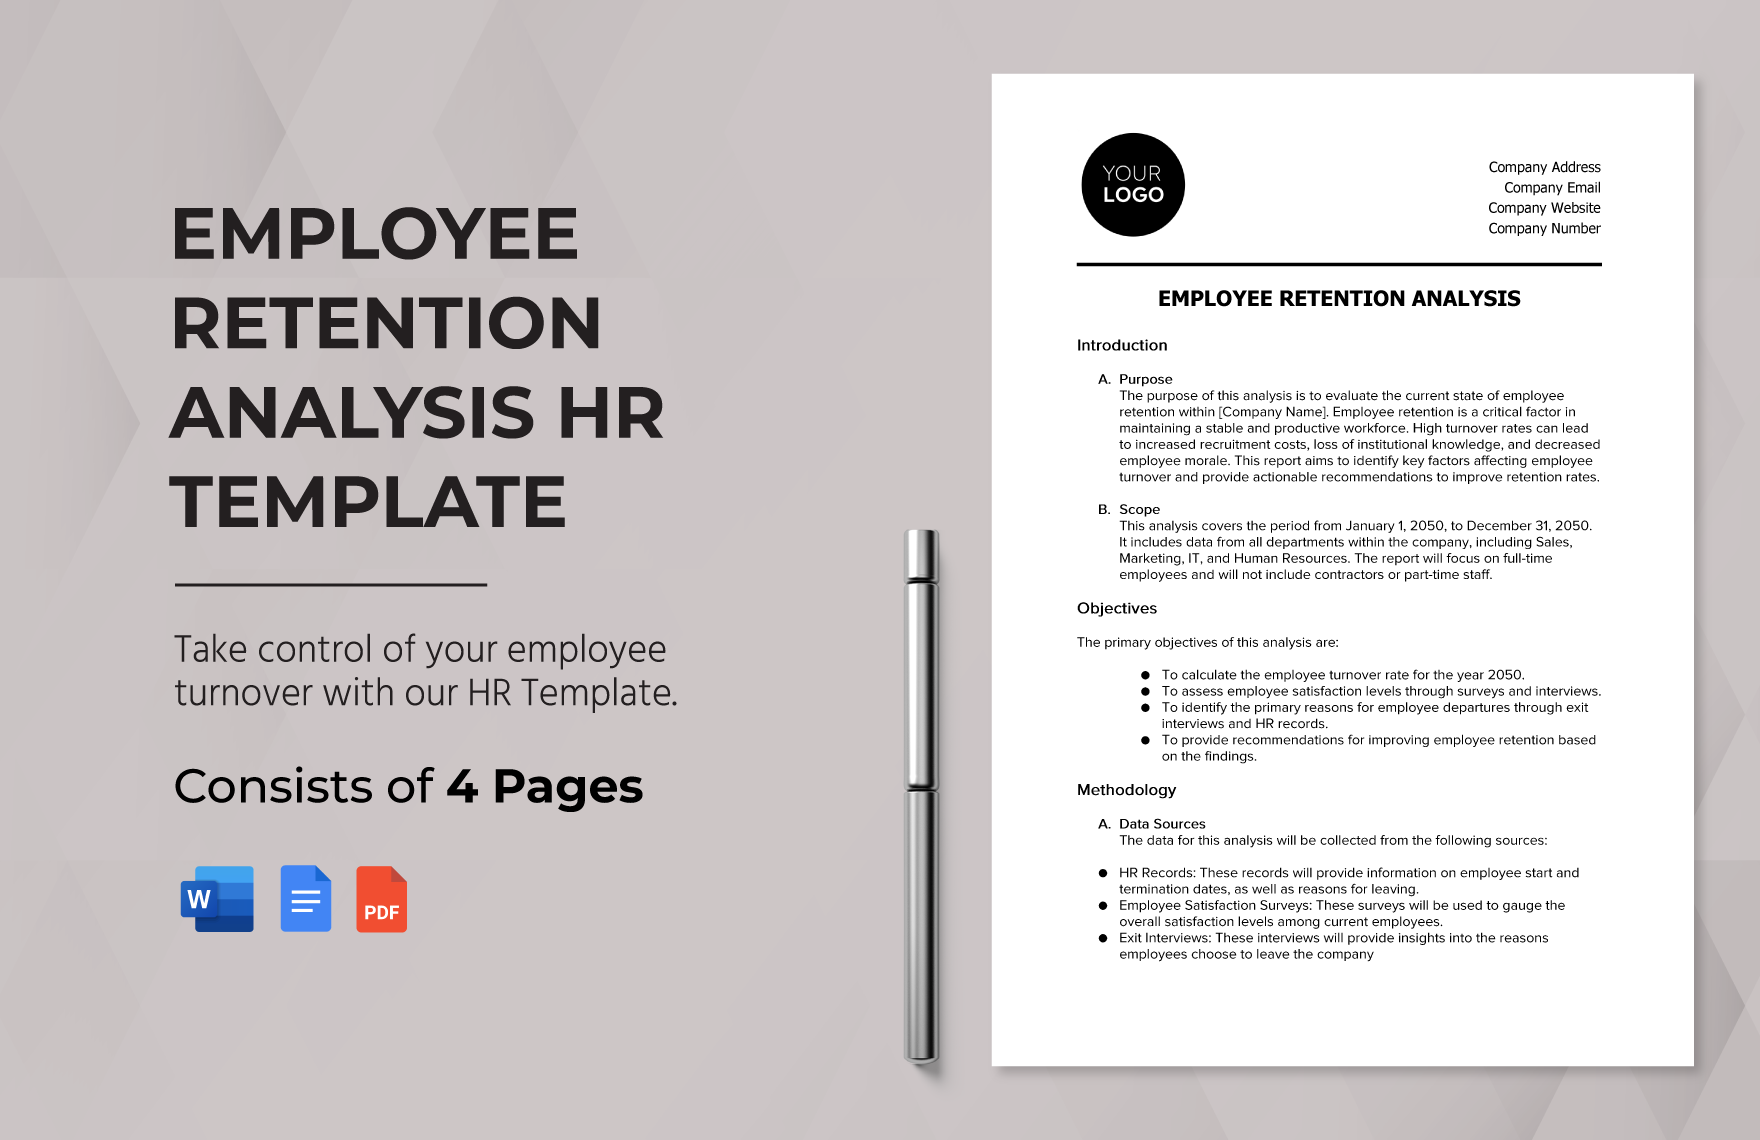 Employee Retention Analysis HR Template